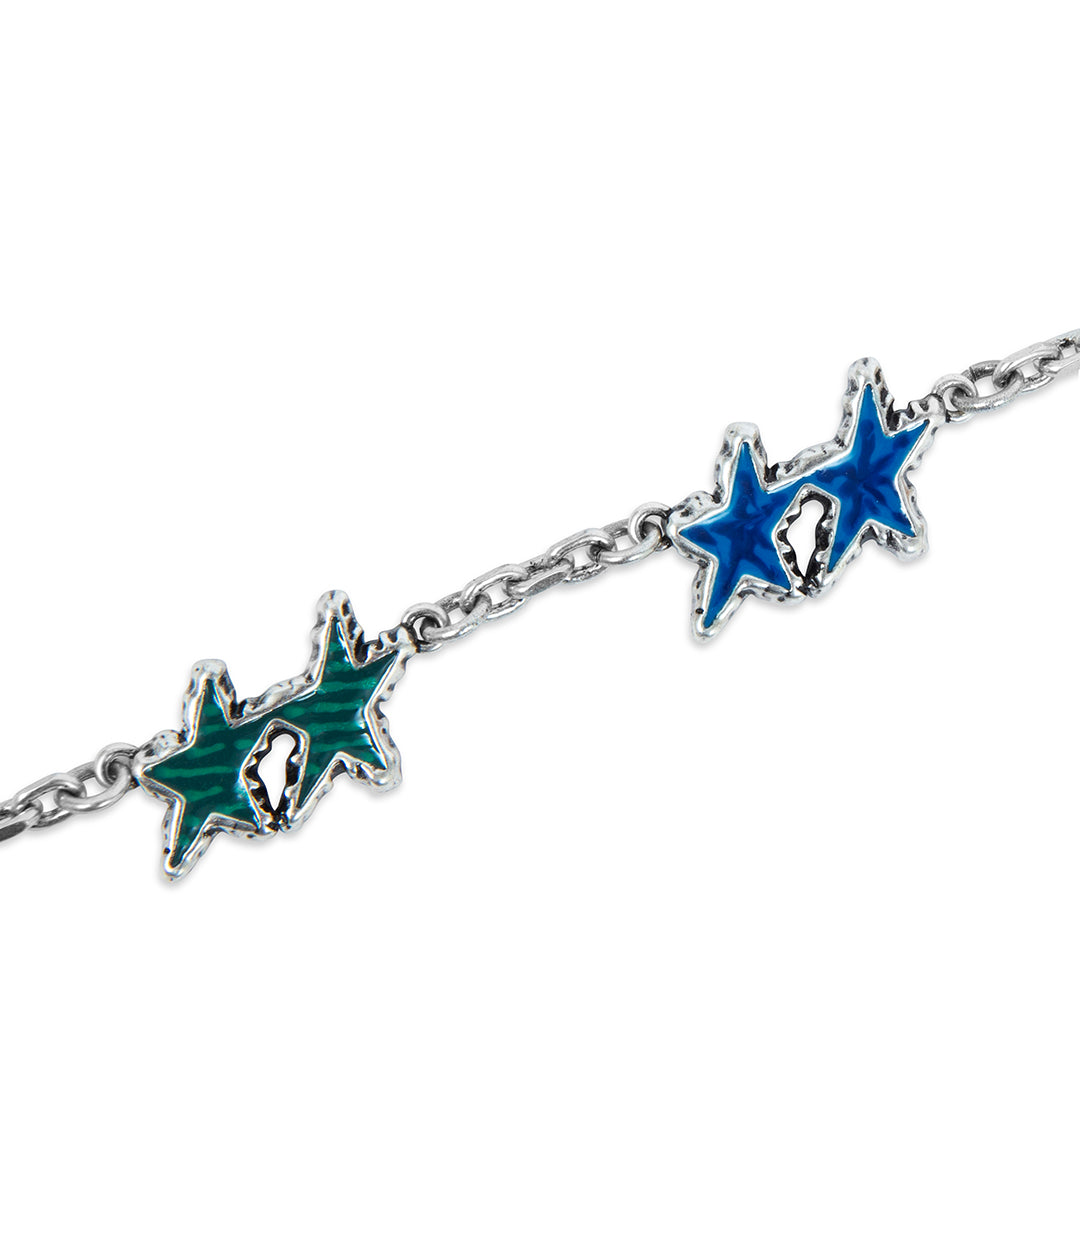 Melted Stars Bracelet